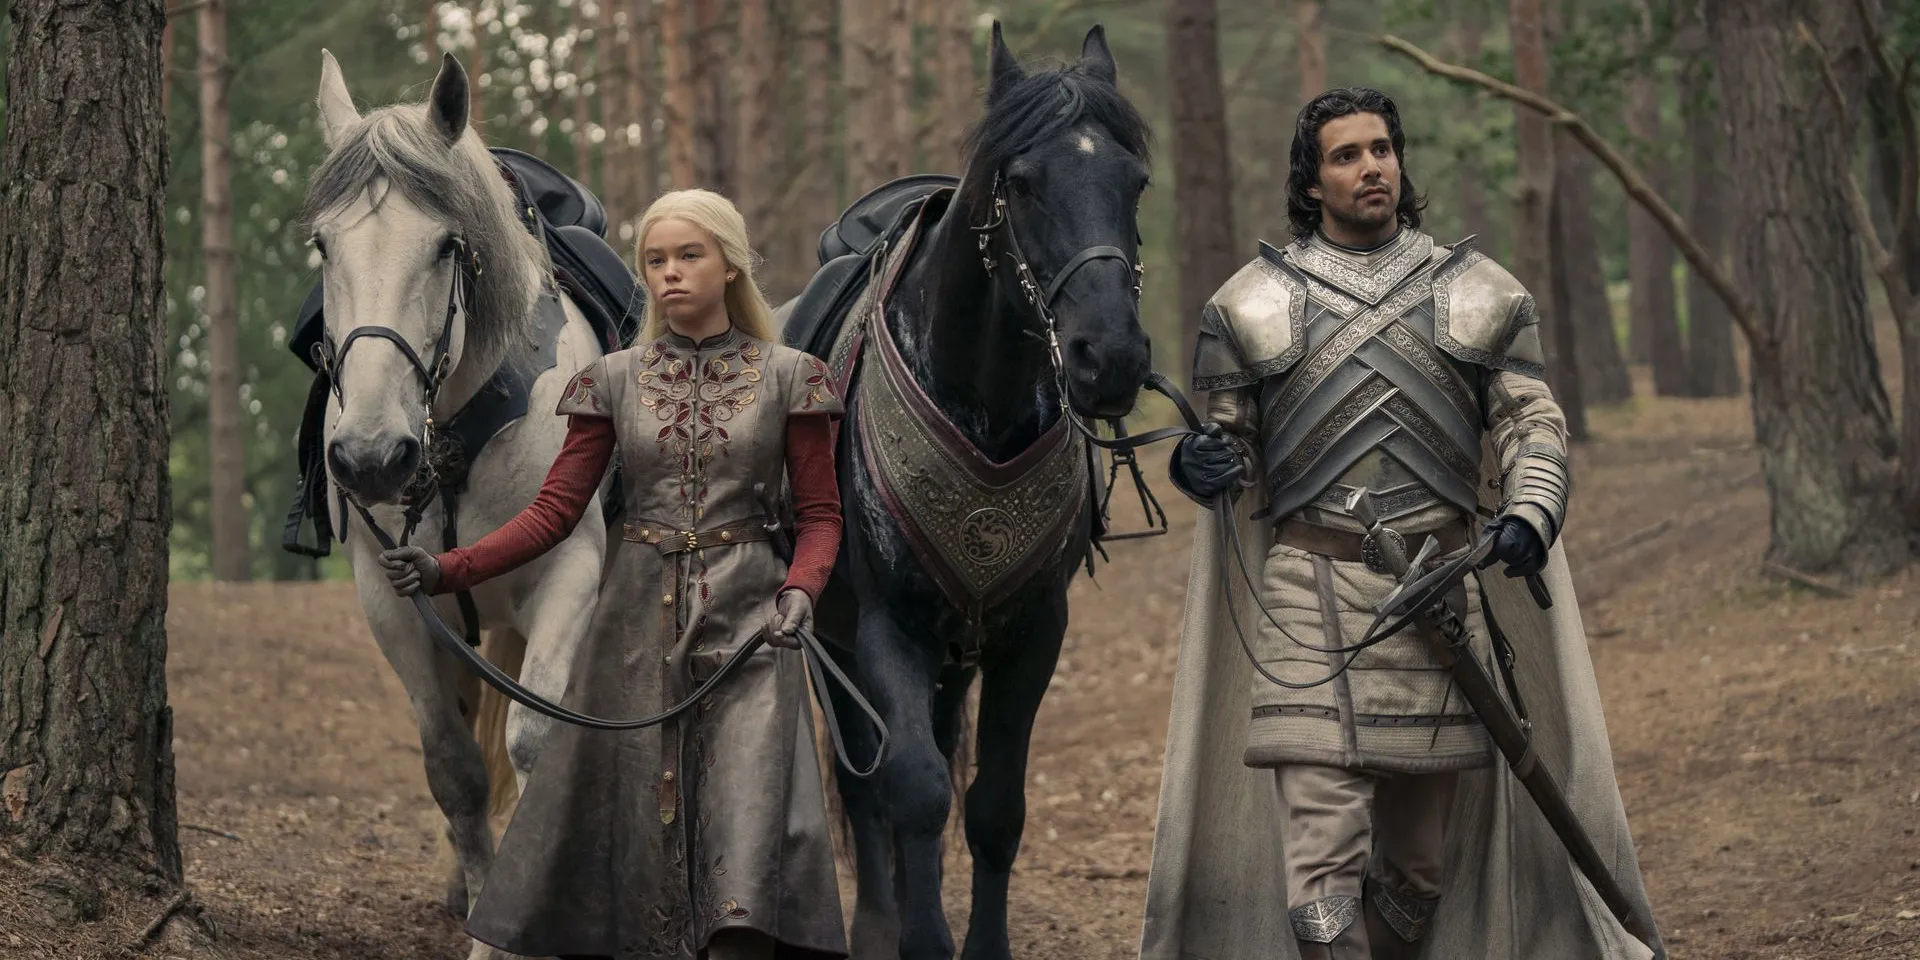 Criston Cole and Rhaenyra Targaryen